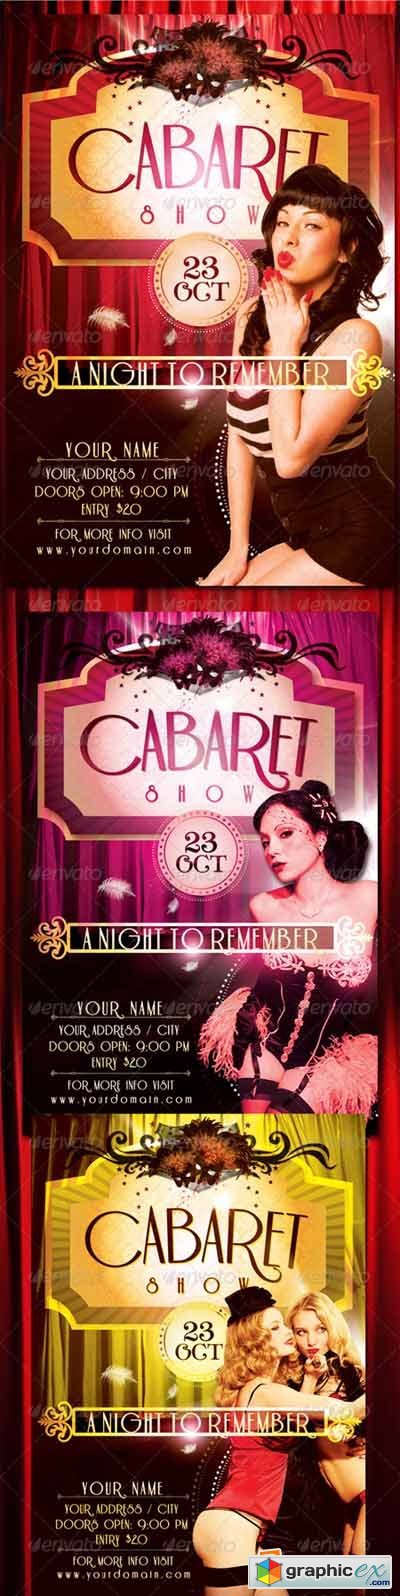 Cabaret Show Flyer Template 548198